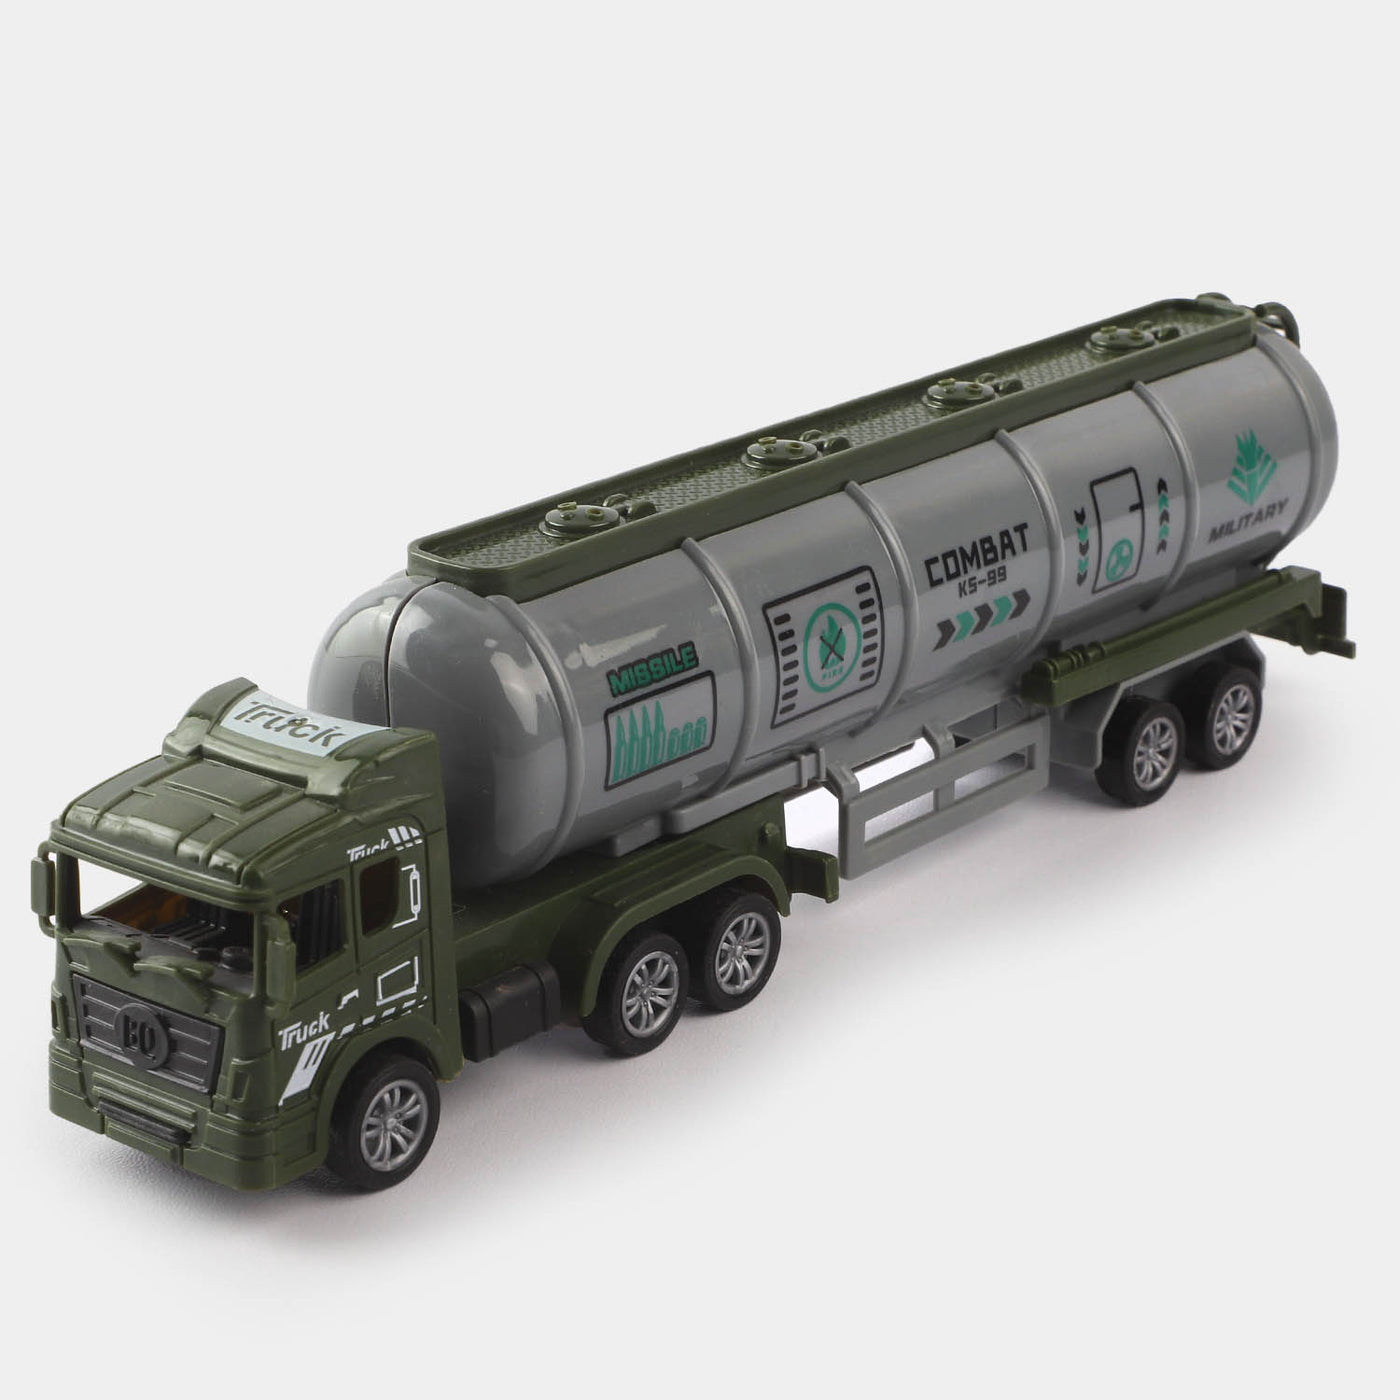 Simulation Mini Simulation Oil Tanker Vehicle Toy